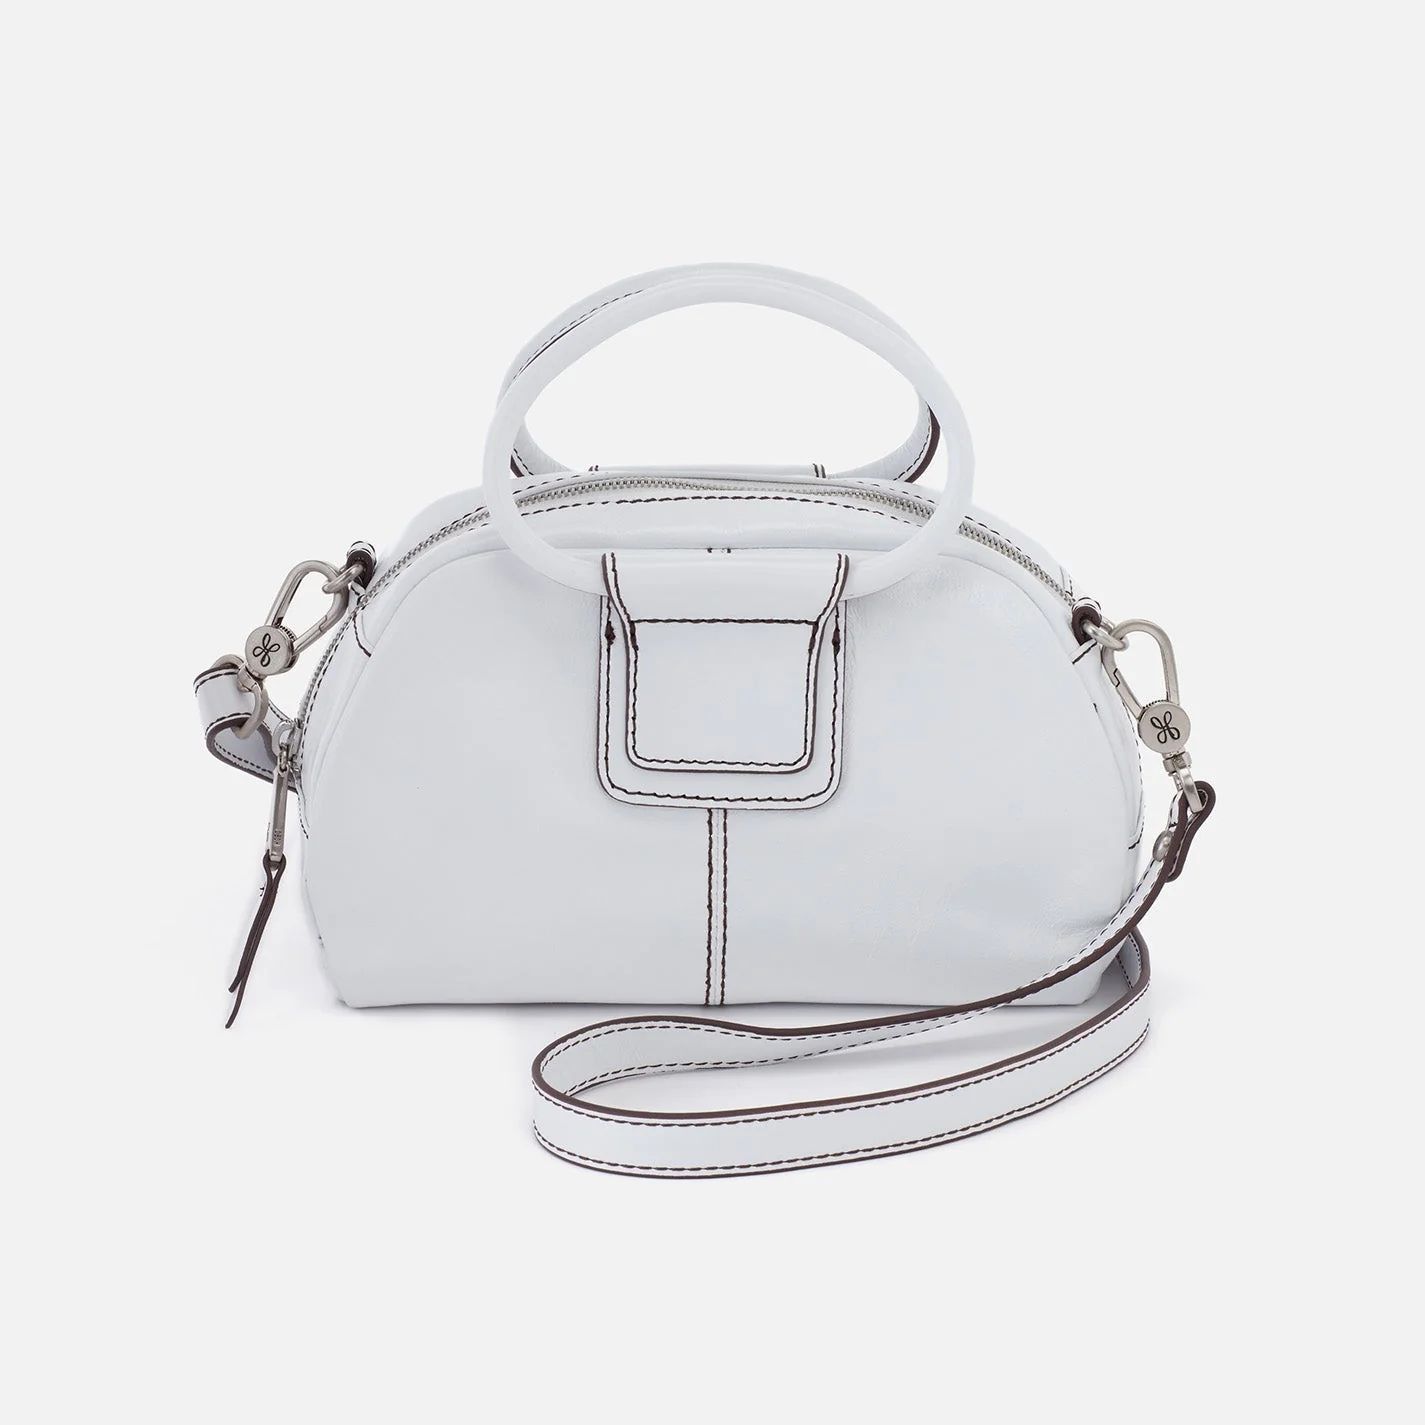 Sheila Small Mini Satchel in Polished Leather - Optic White | HOBO Bags